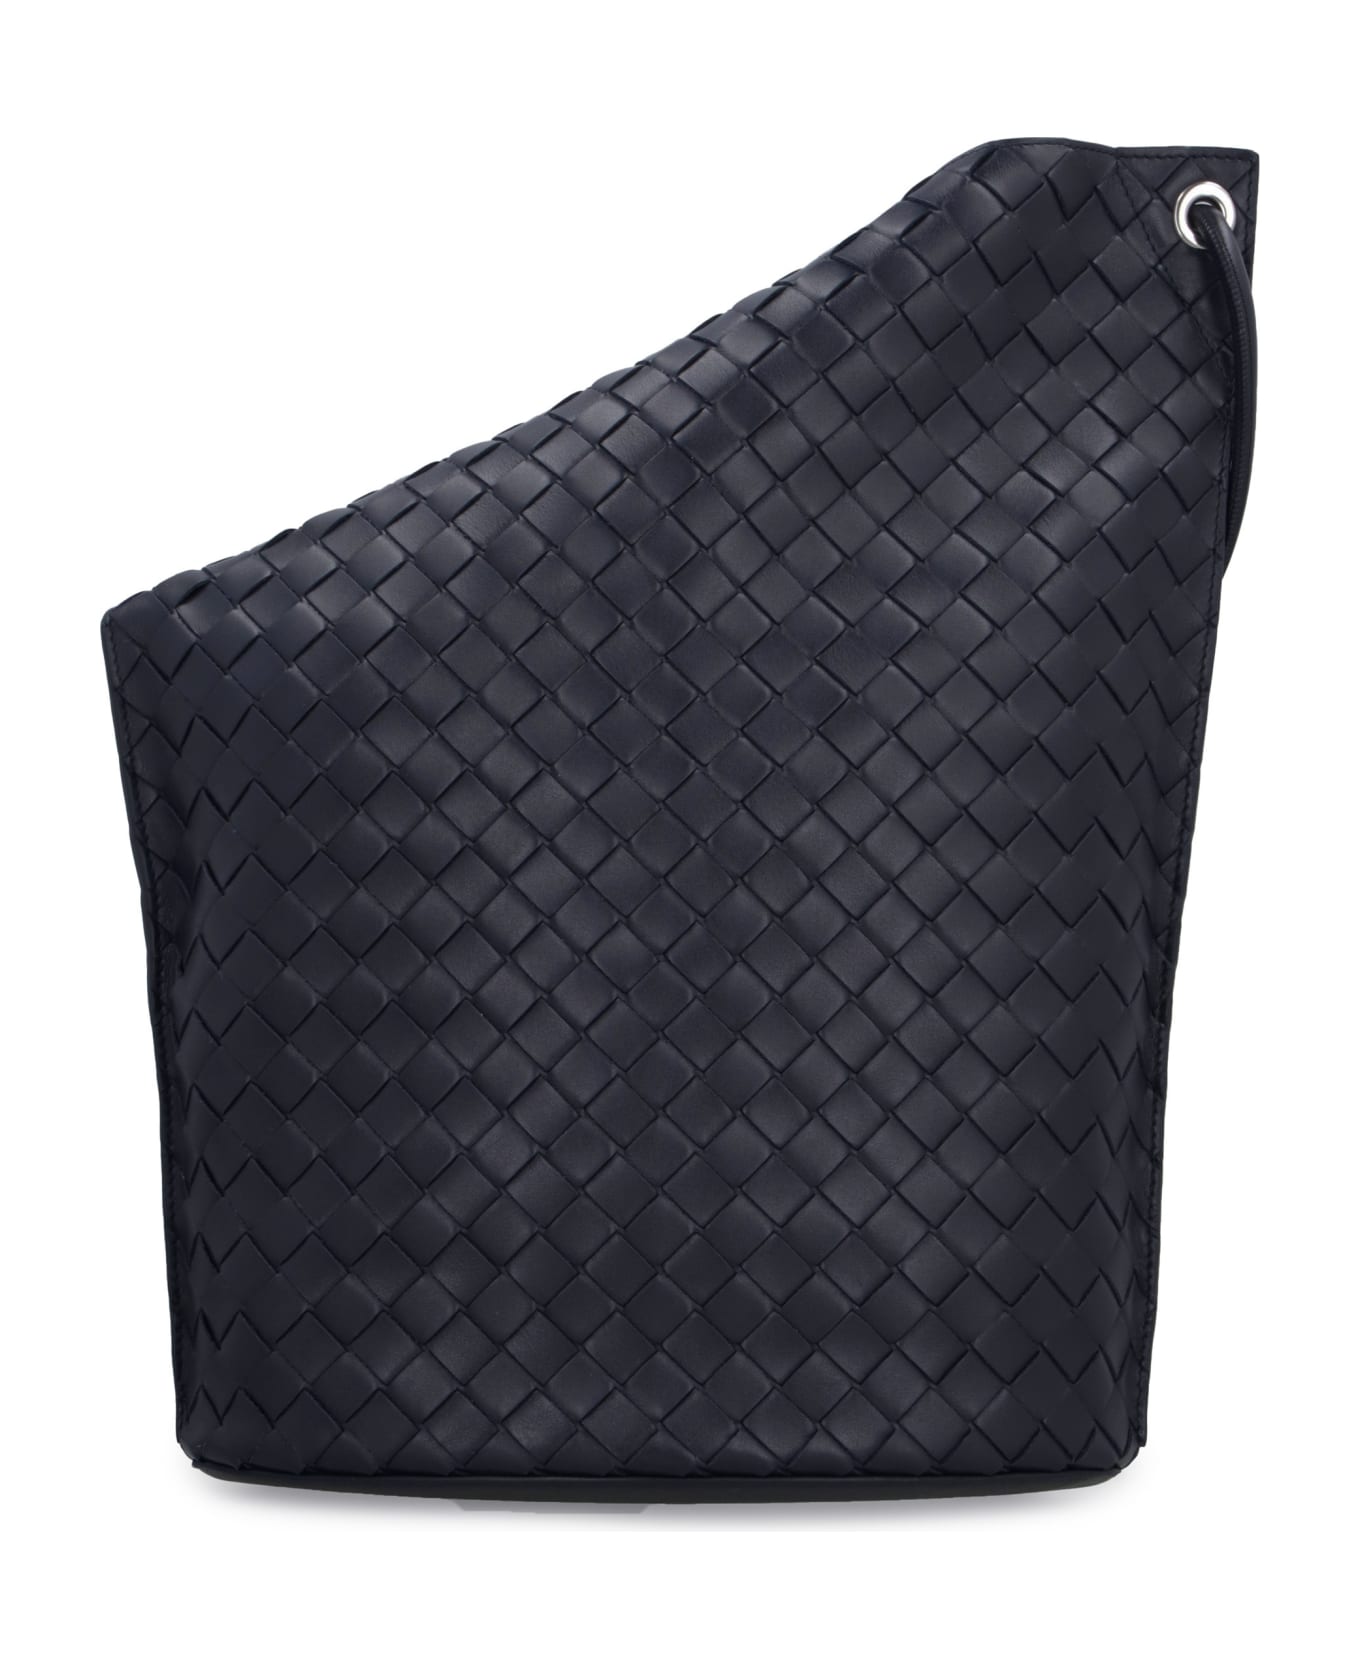 Bottega Veneta Leather Shoulder Bag - NAVY